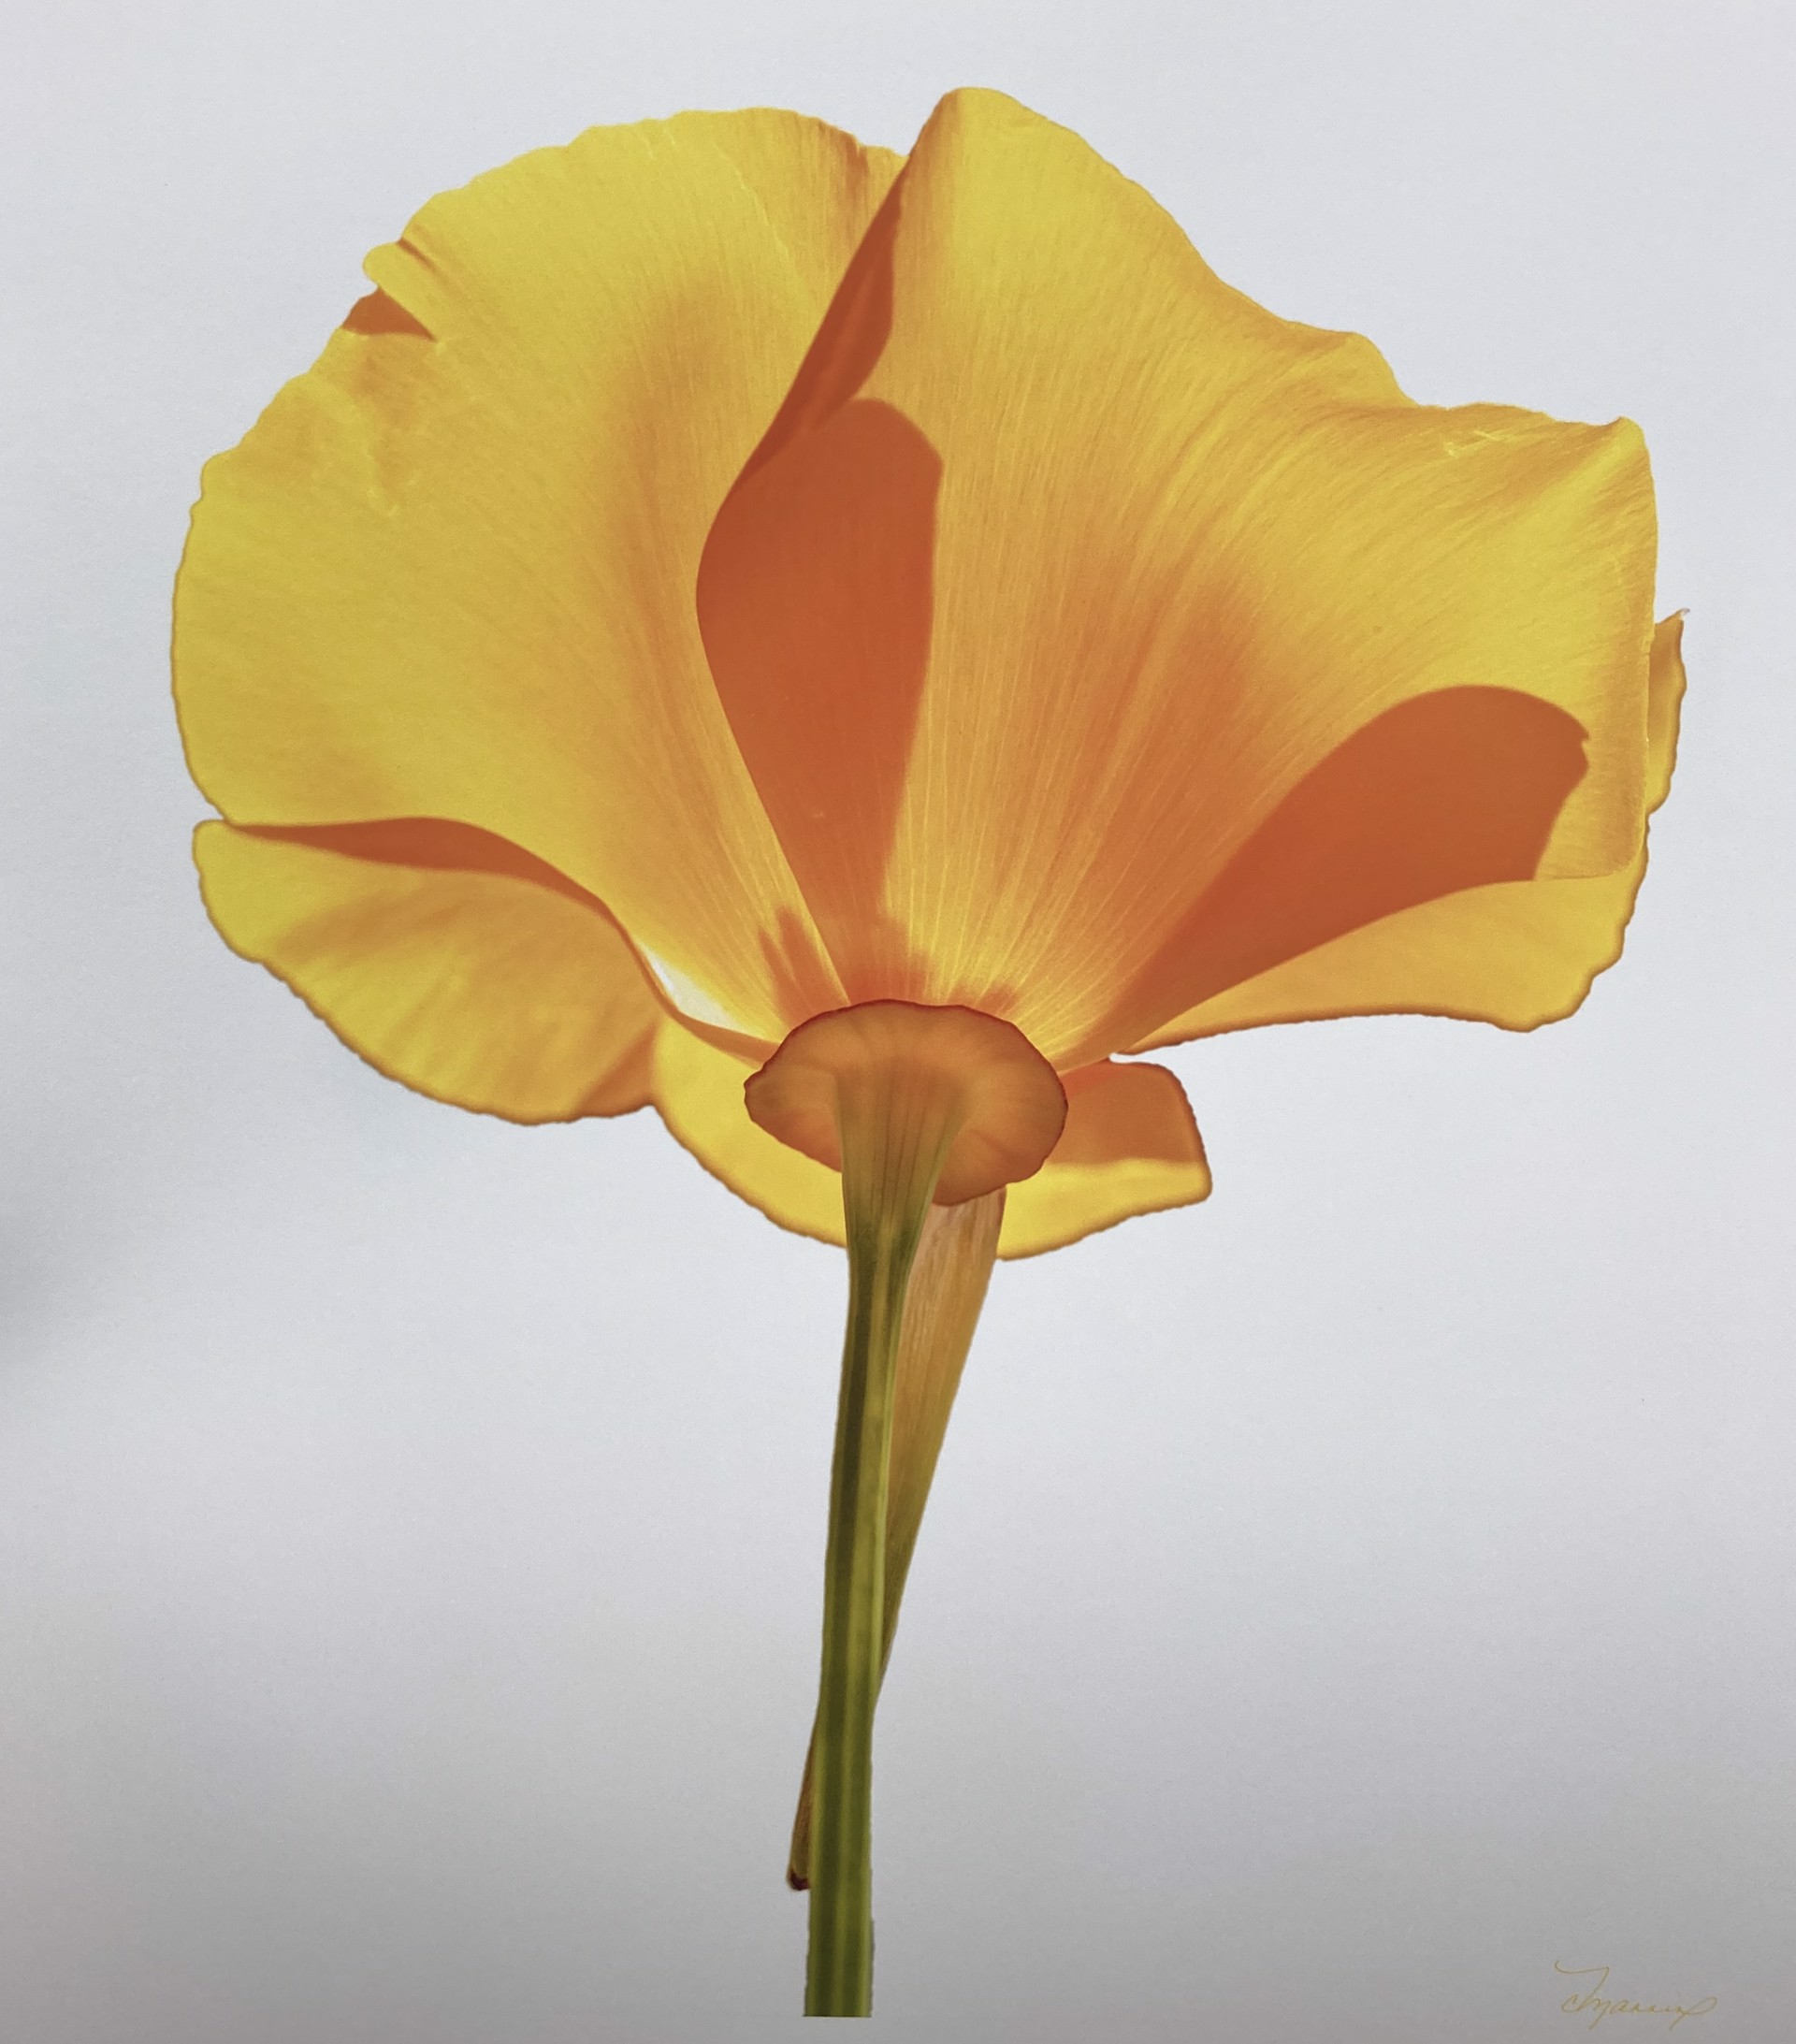 Sunshine (Yellow California Poppy) by Cathy Manning